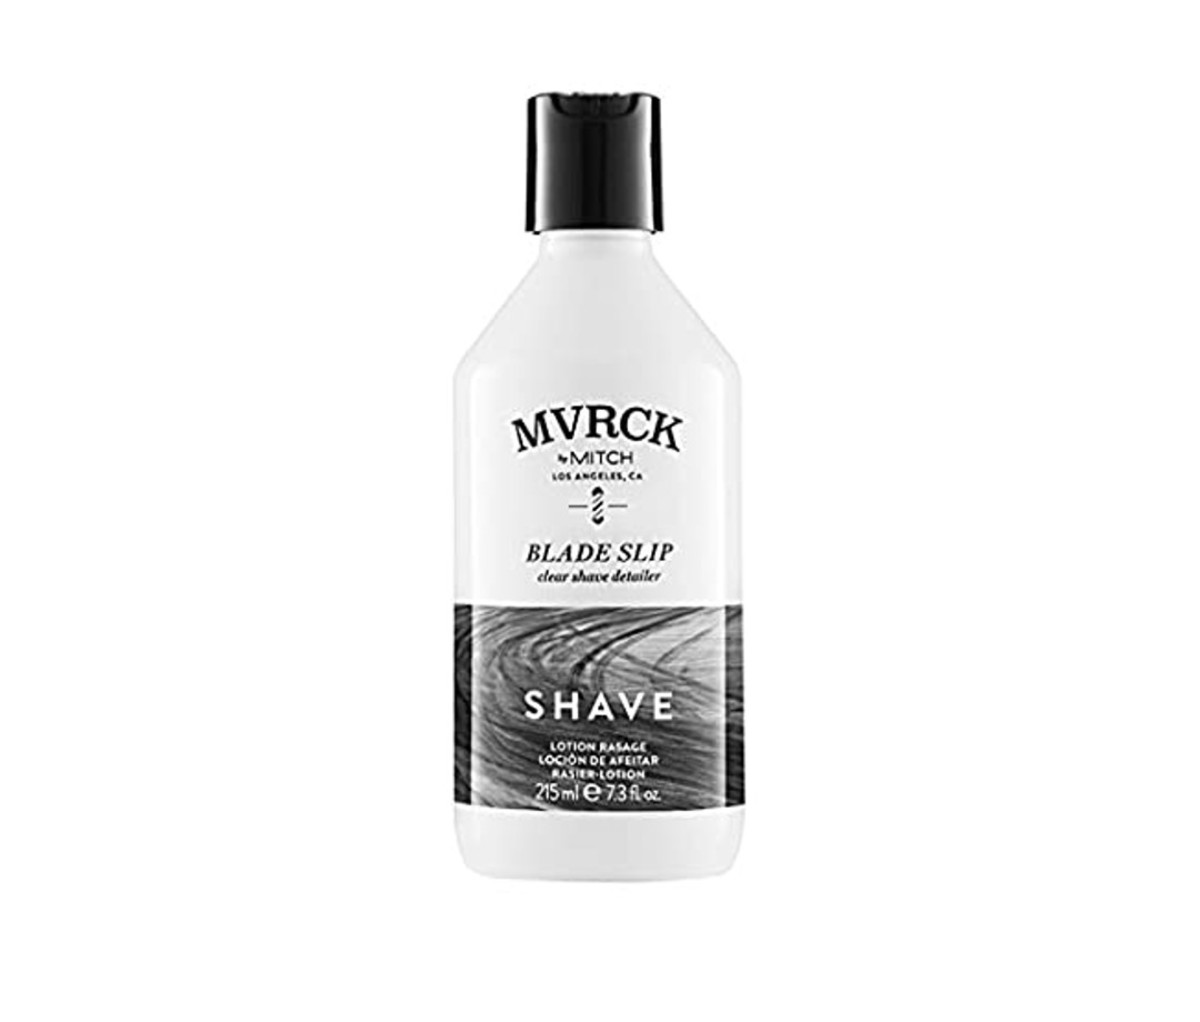 MVRCK by Mitch Blade Slip Shaving Cream